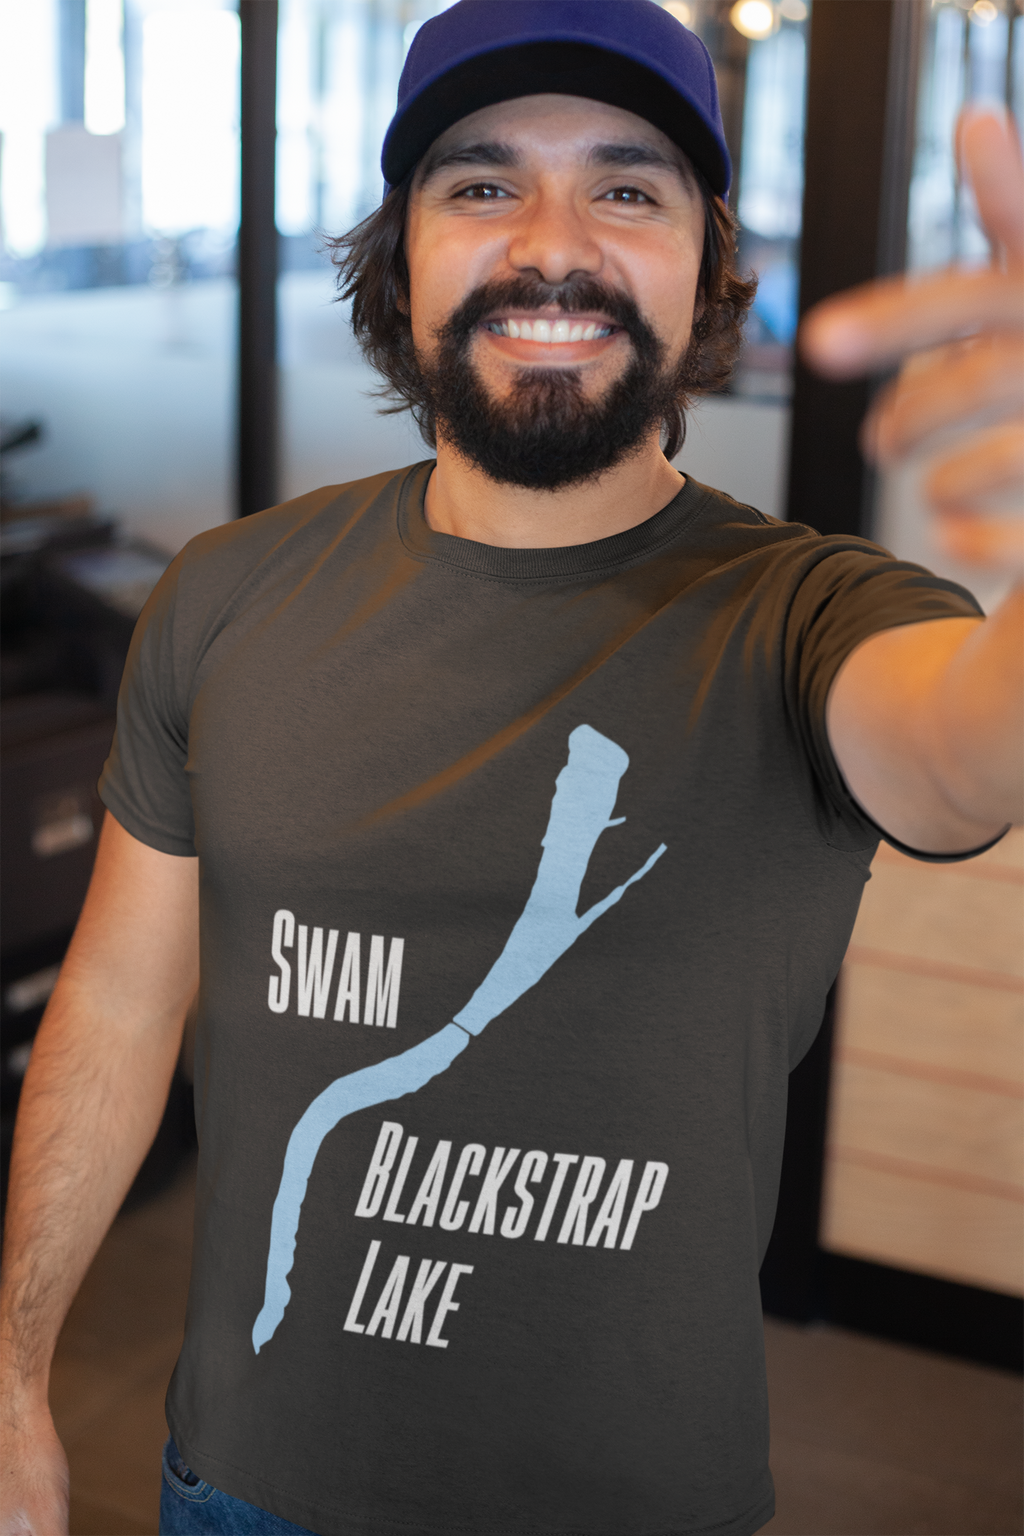 Swam Blackstrap Lake t-shirt